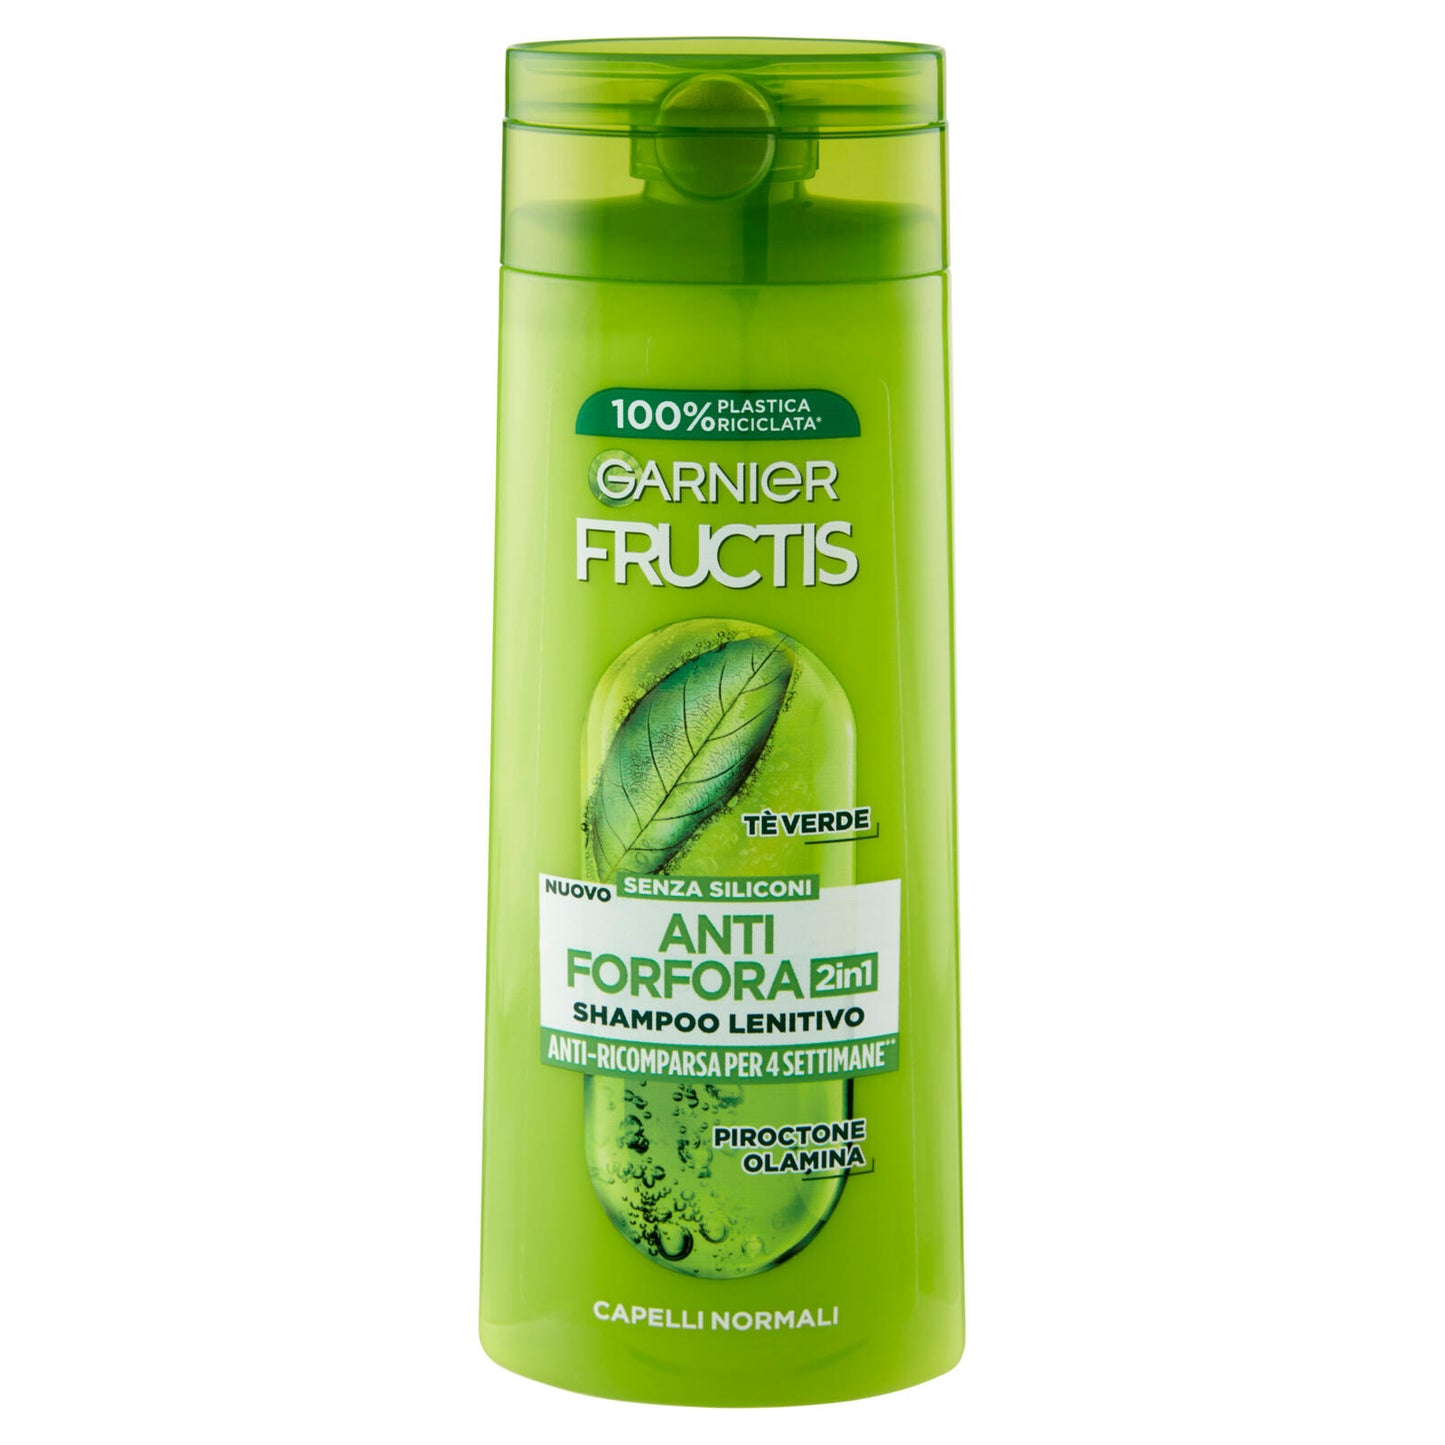 Garnier Fructis Shampoo Antiforfora 2in1 lenitivo, per capelli normali, 250 ml